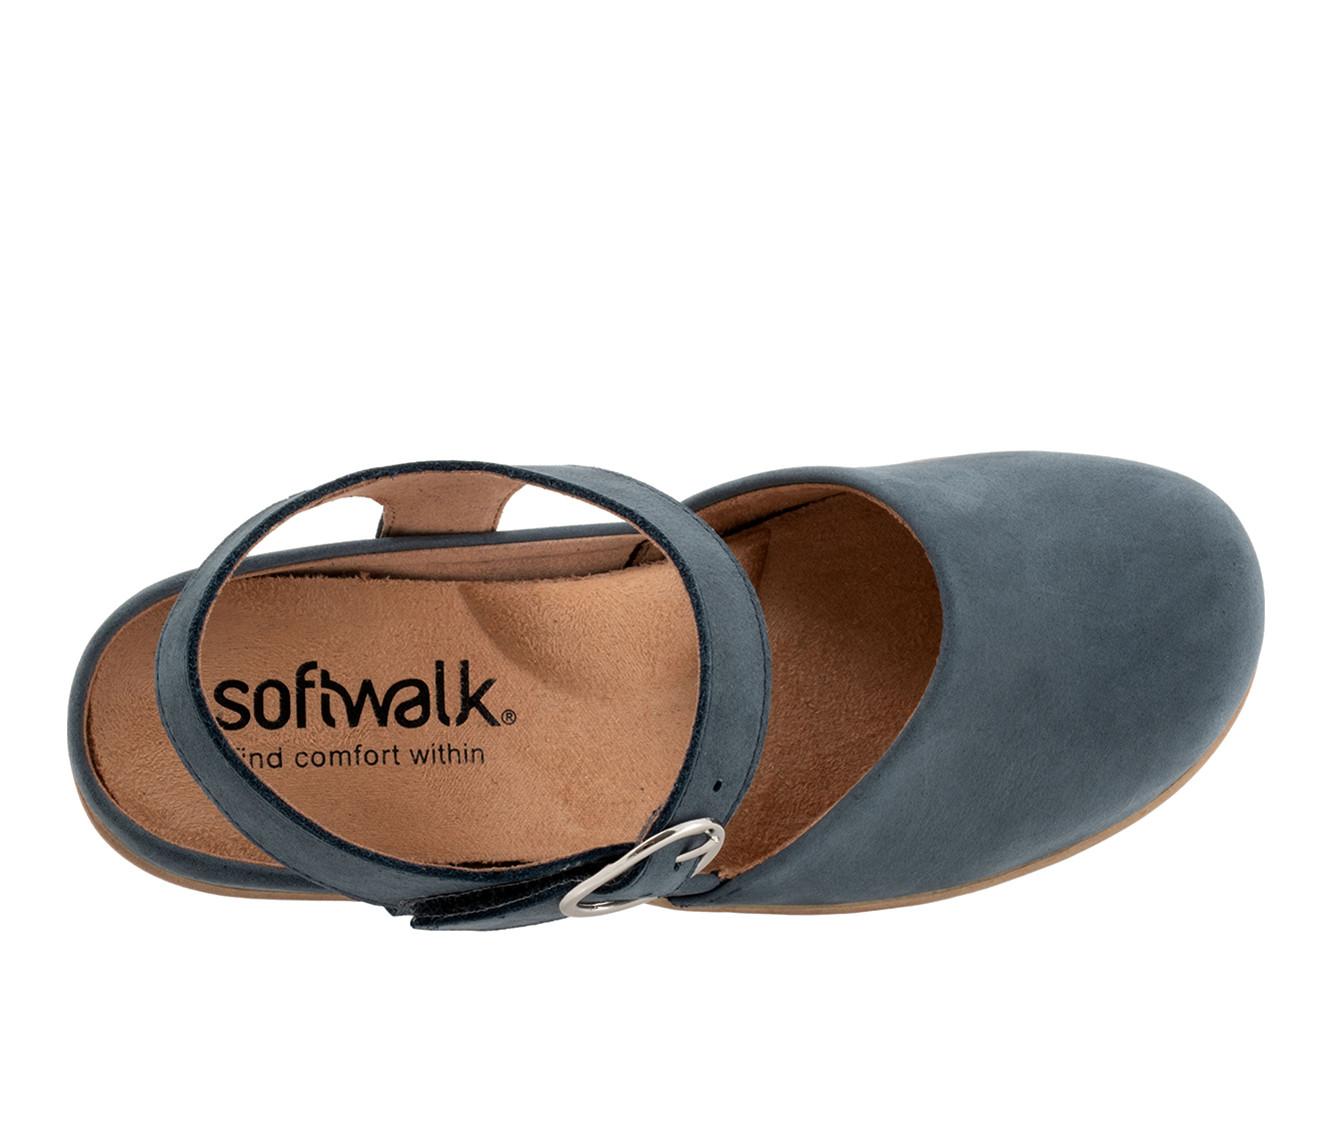 Women's Softwalk Mabelle Wedge Sandals